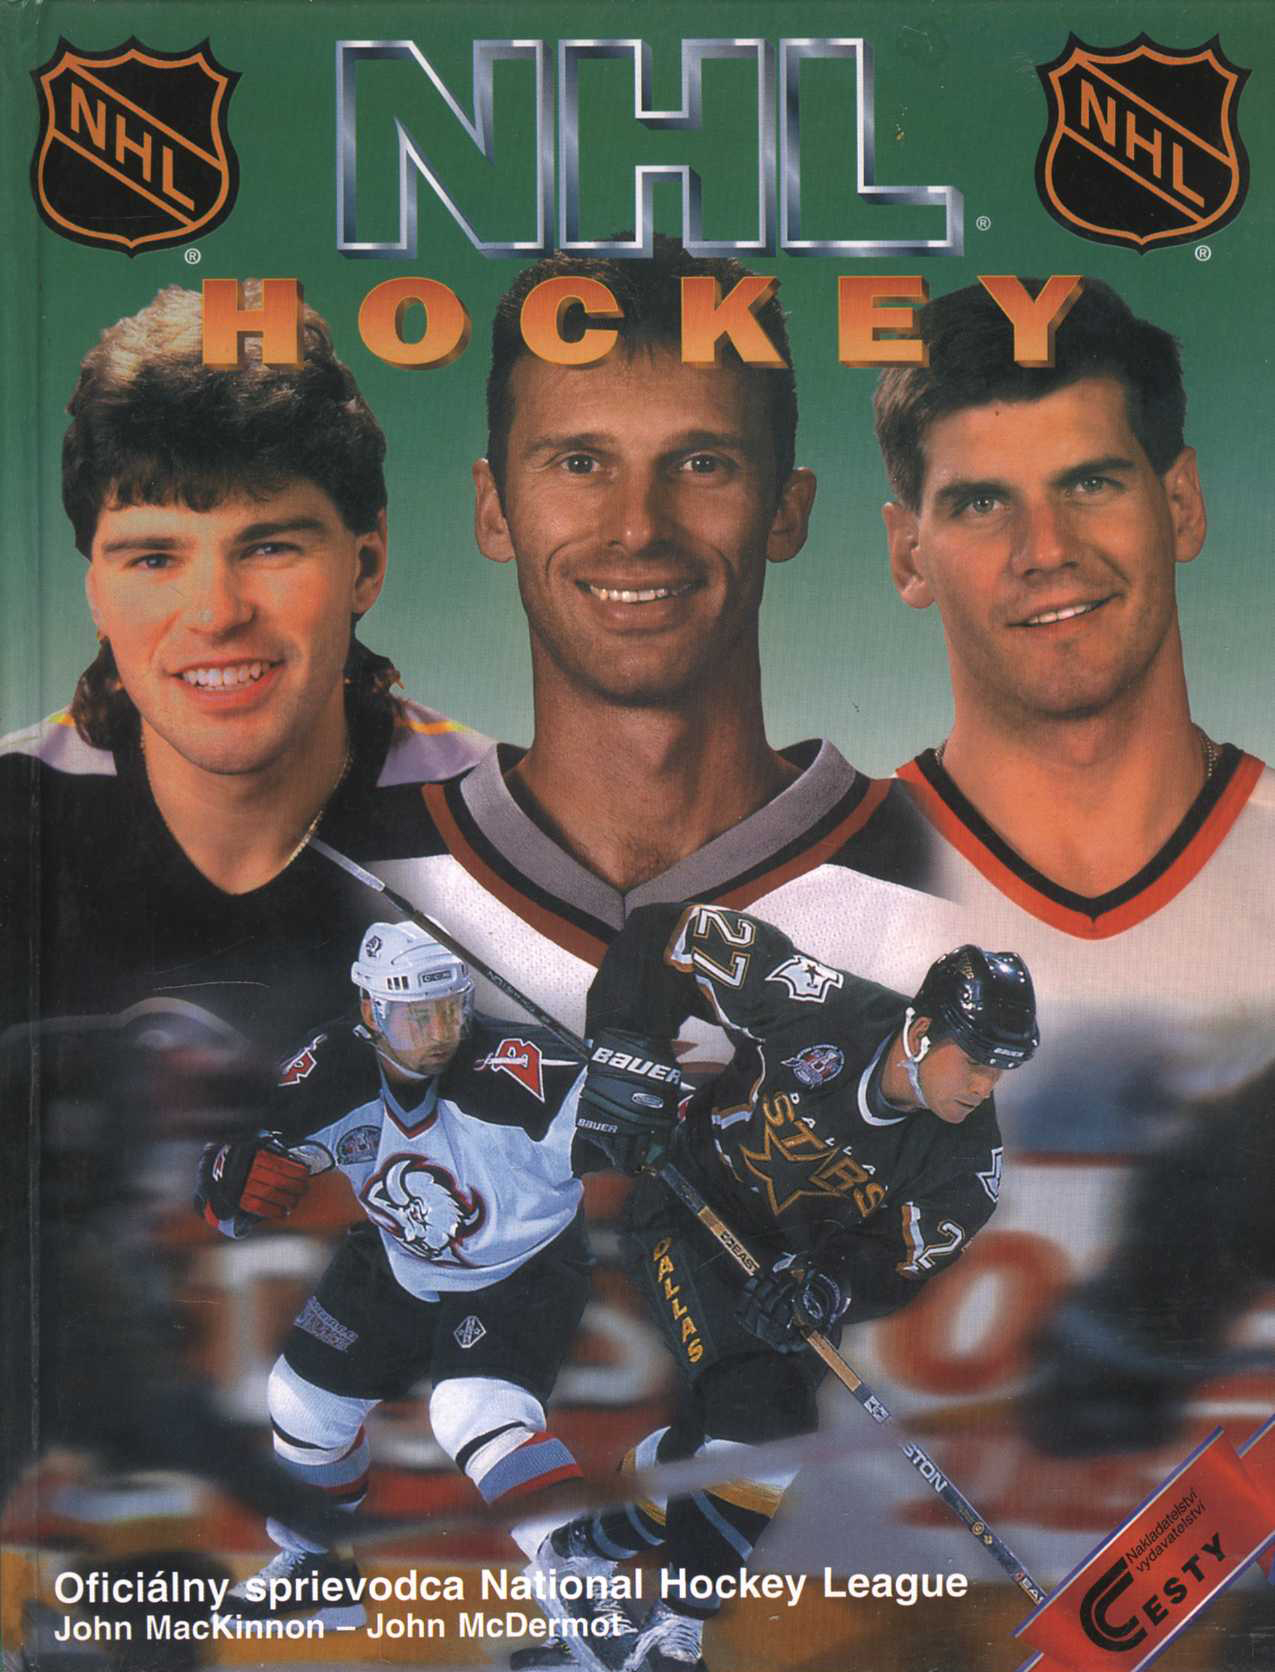 NHL Hockey (John McKinnon)